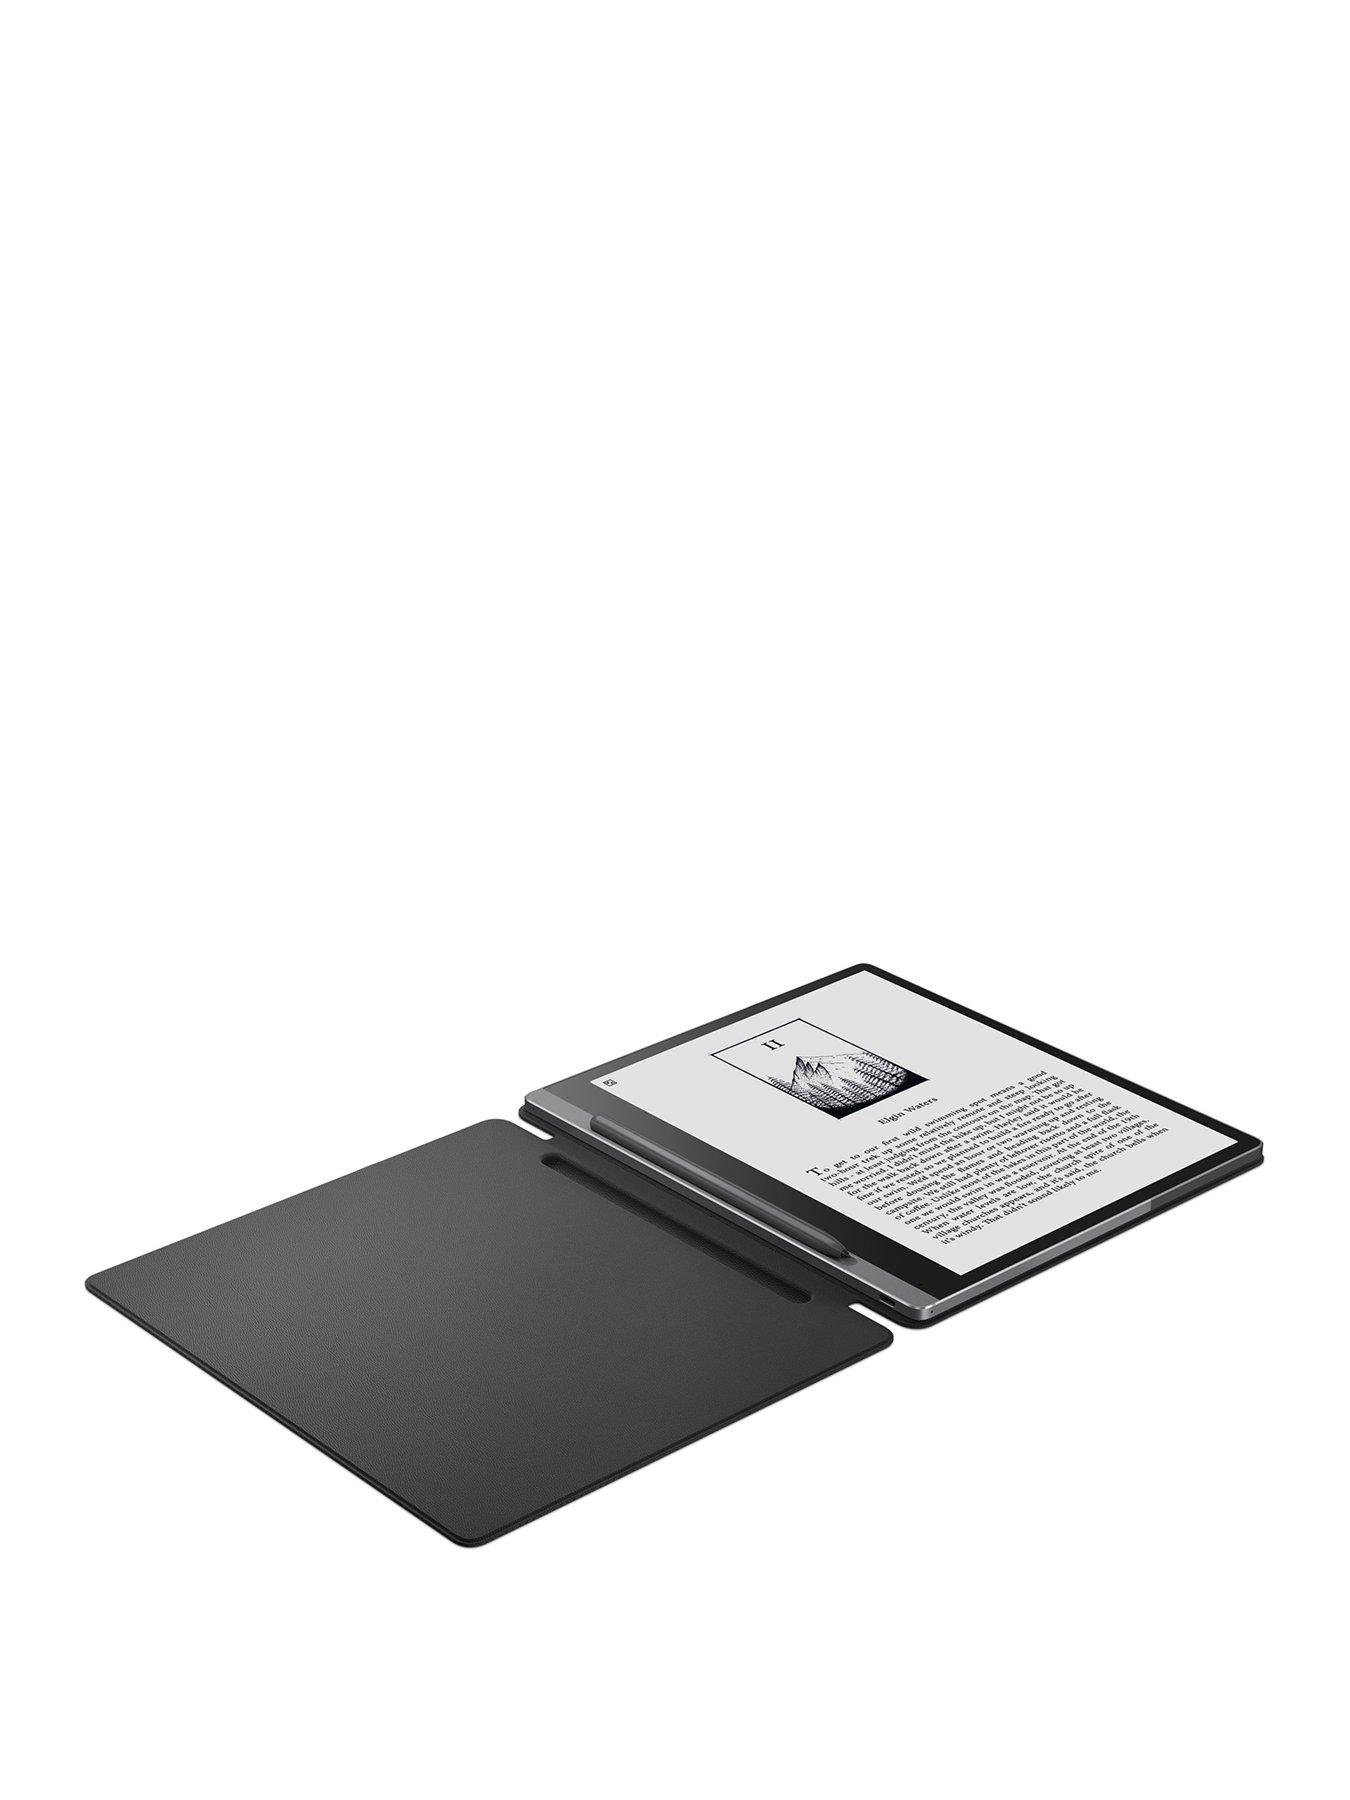 Premium BLACK Felt Pin Book (White Cover) – Happie Galaxie